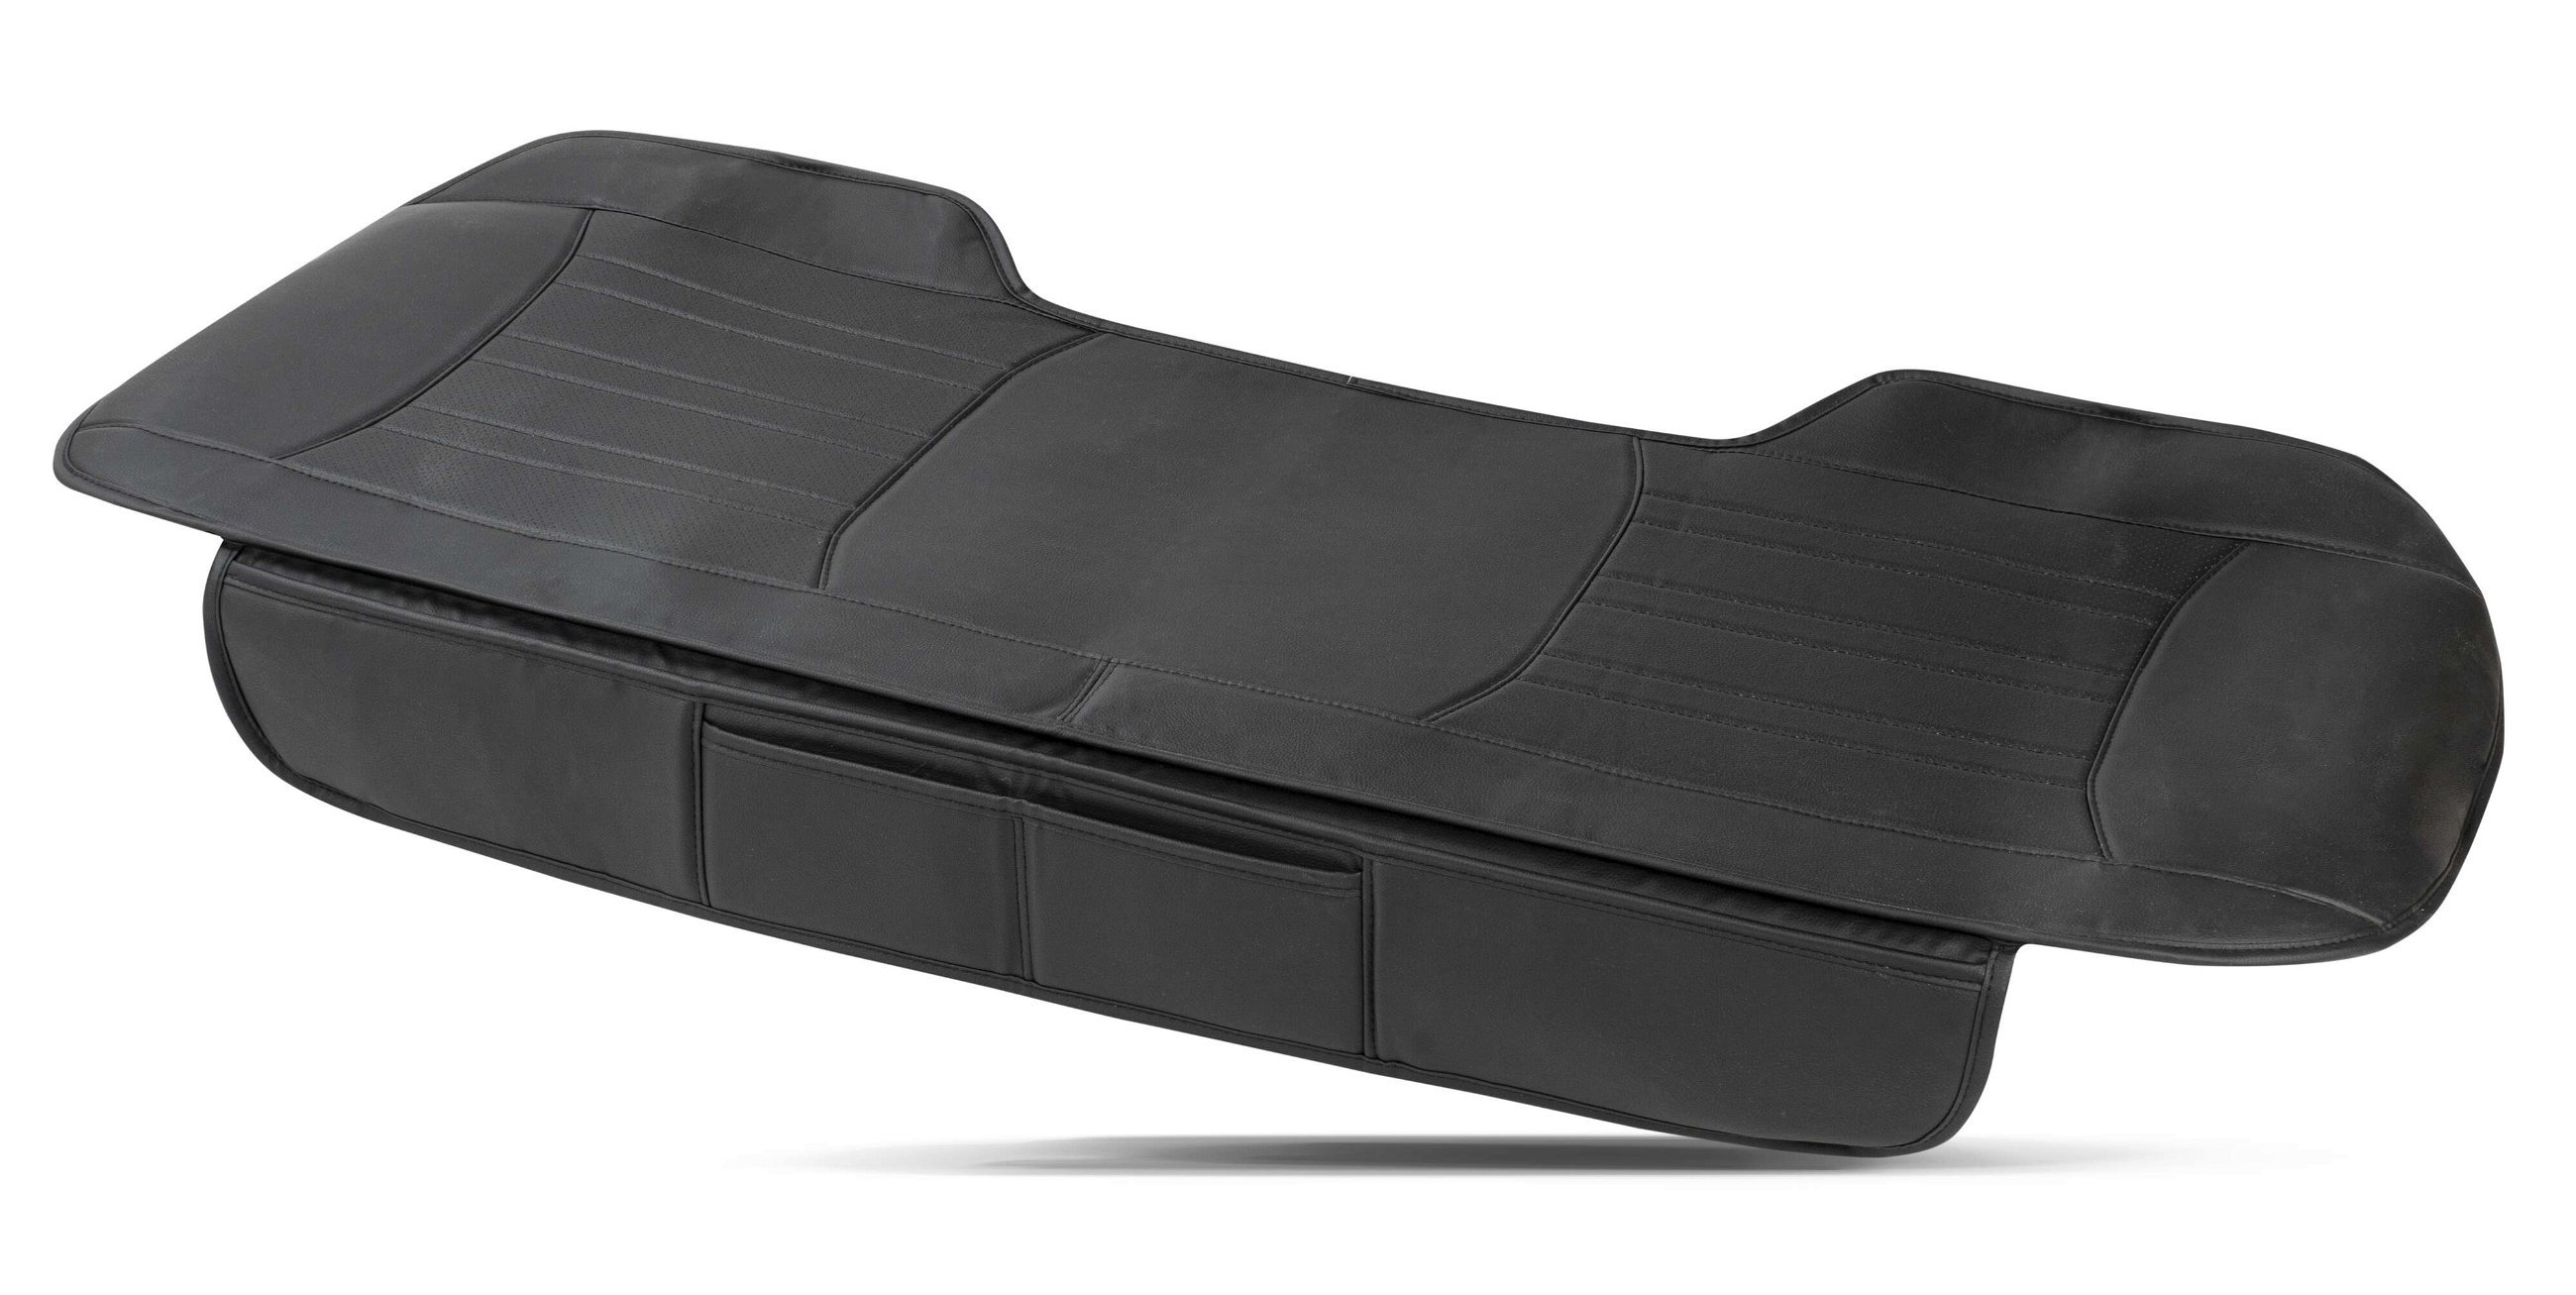 PKW Sitzauflage Fernando, Auto Sitzaufleger Rücksitzbank, Auto Sitzschoner Sitzfläche 1 Stück schwarz